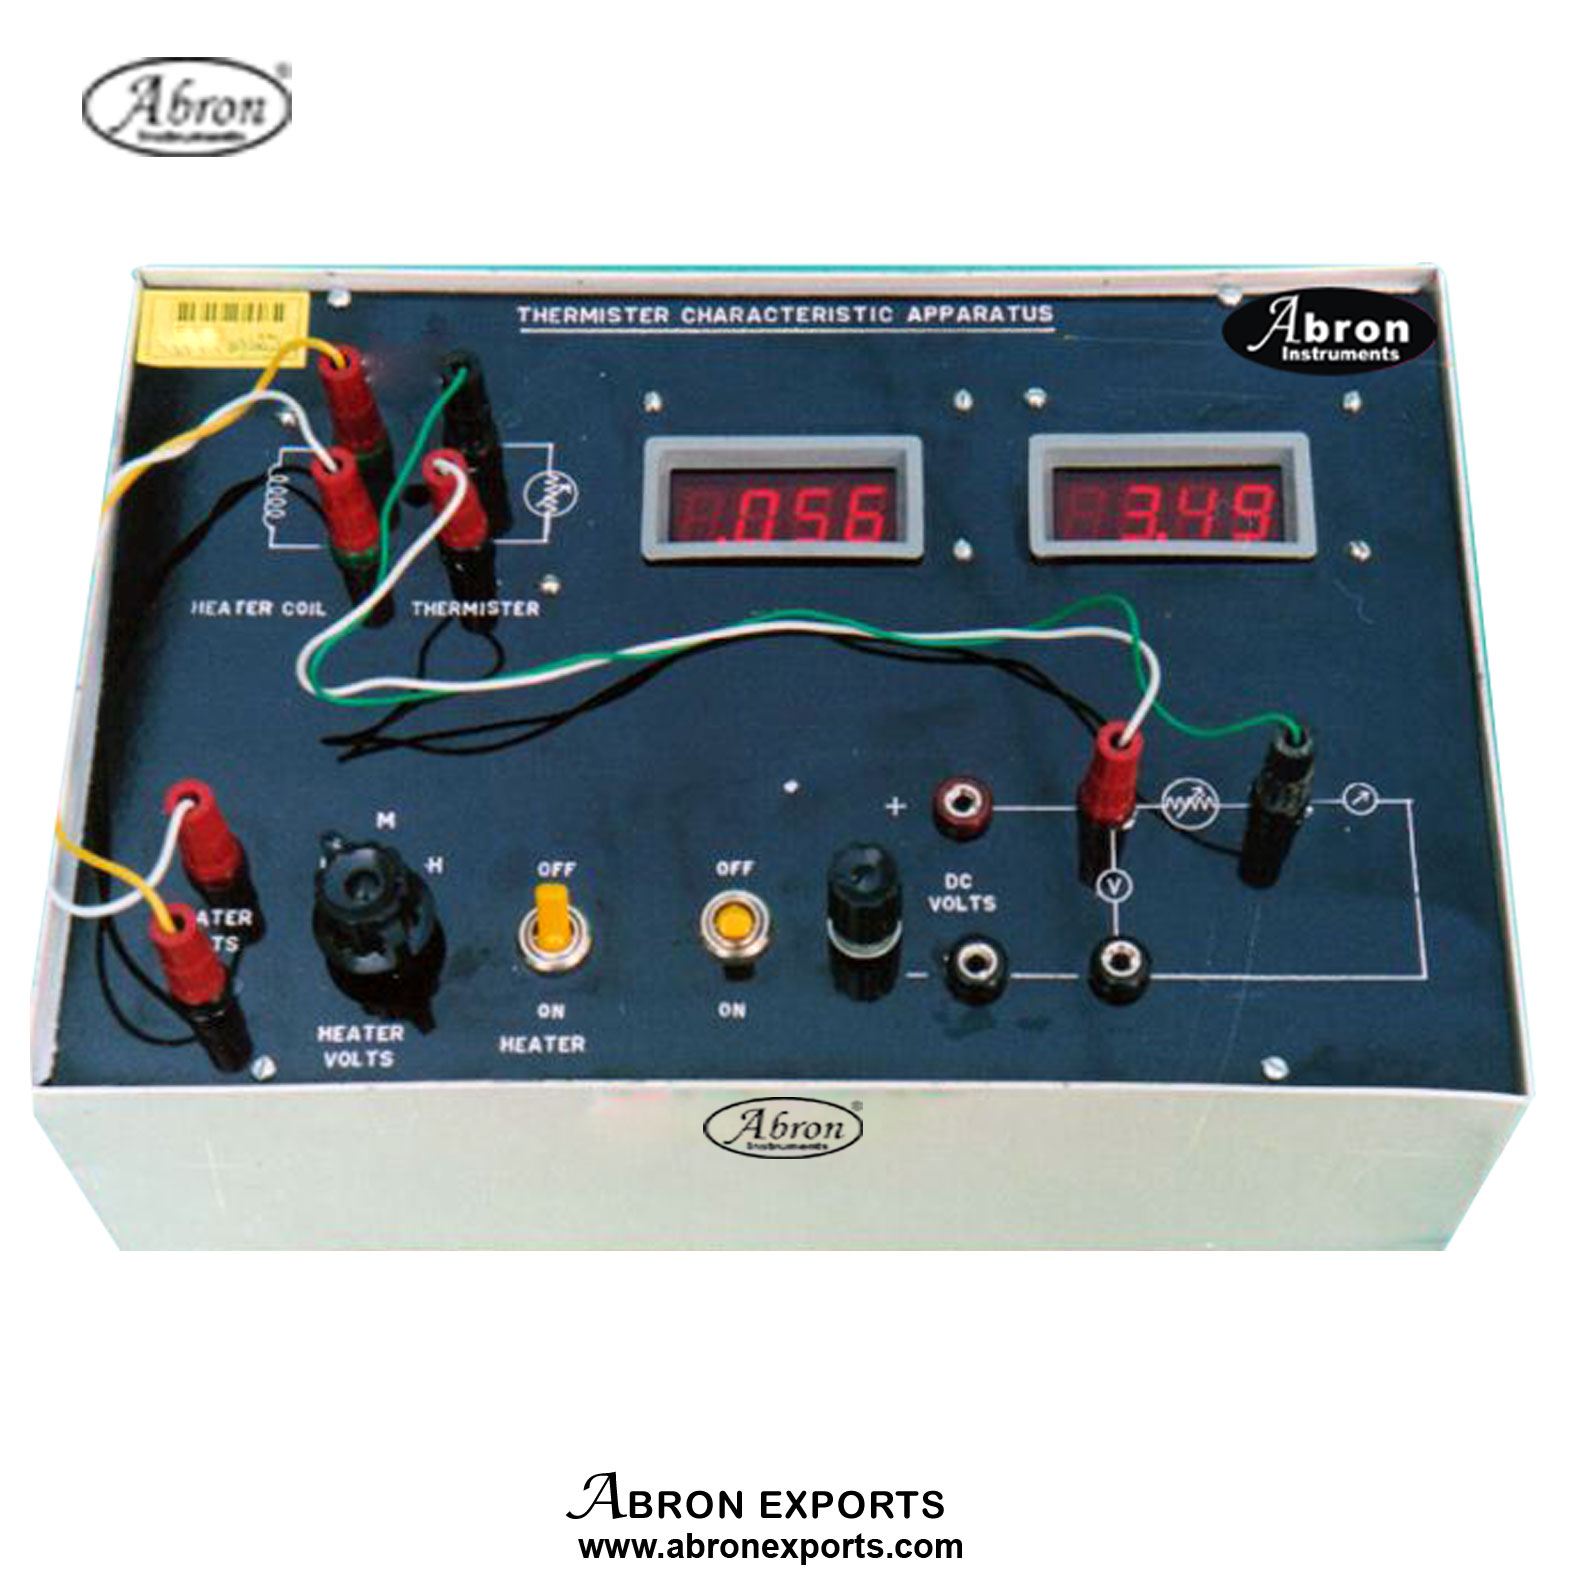 Thermister Ch Apparatus Mini Oven,Meters Abron AE-1431